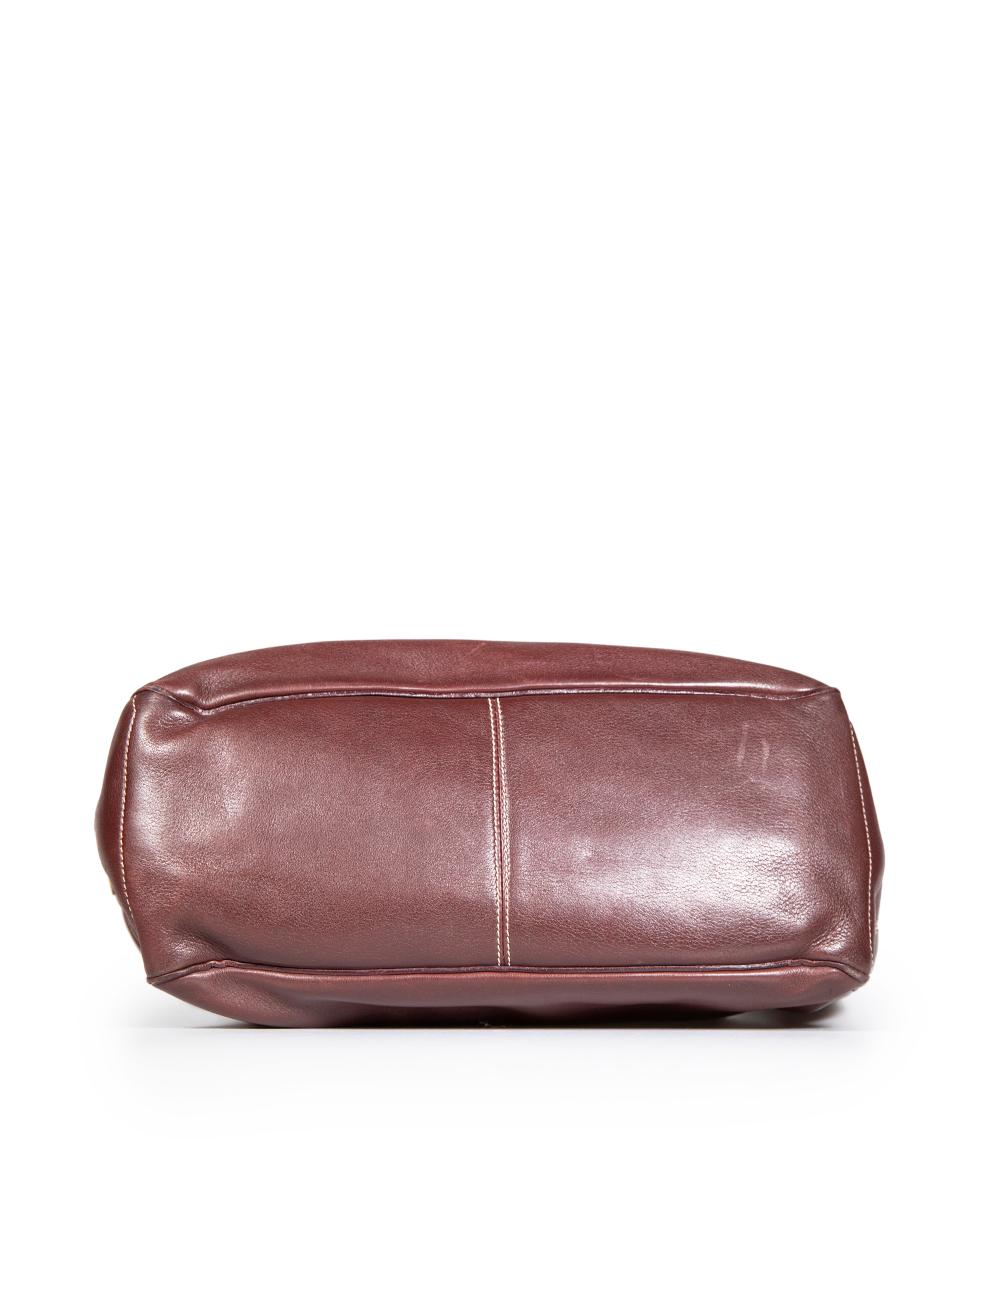 Women's Céline Brown Leather Boogie Handbag For Sale